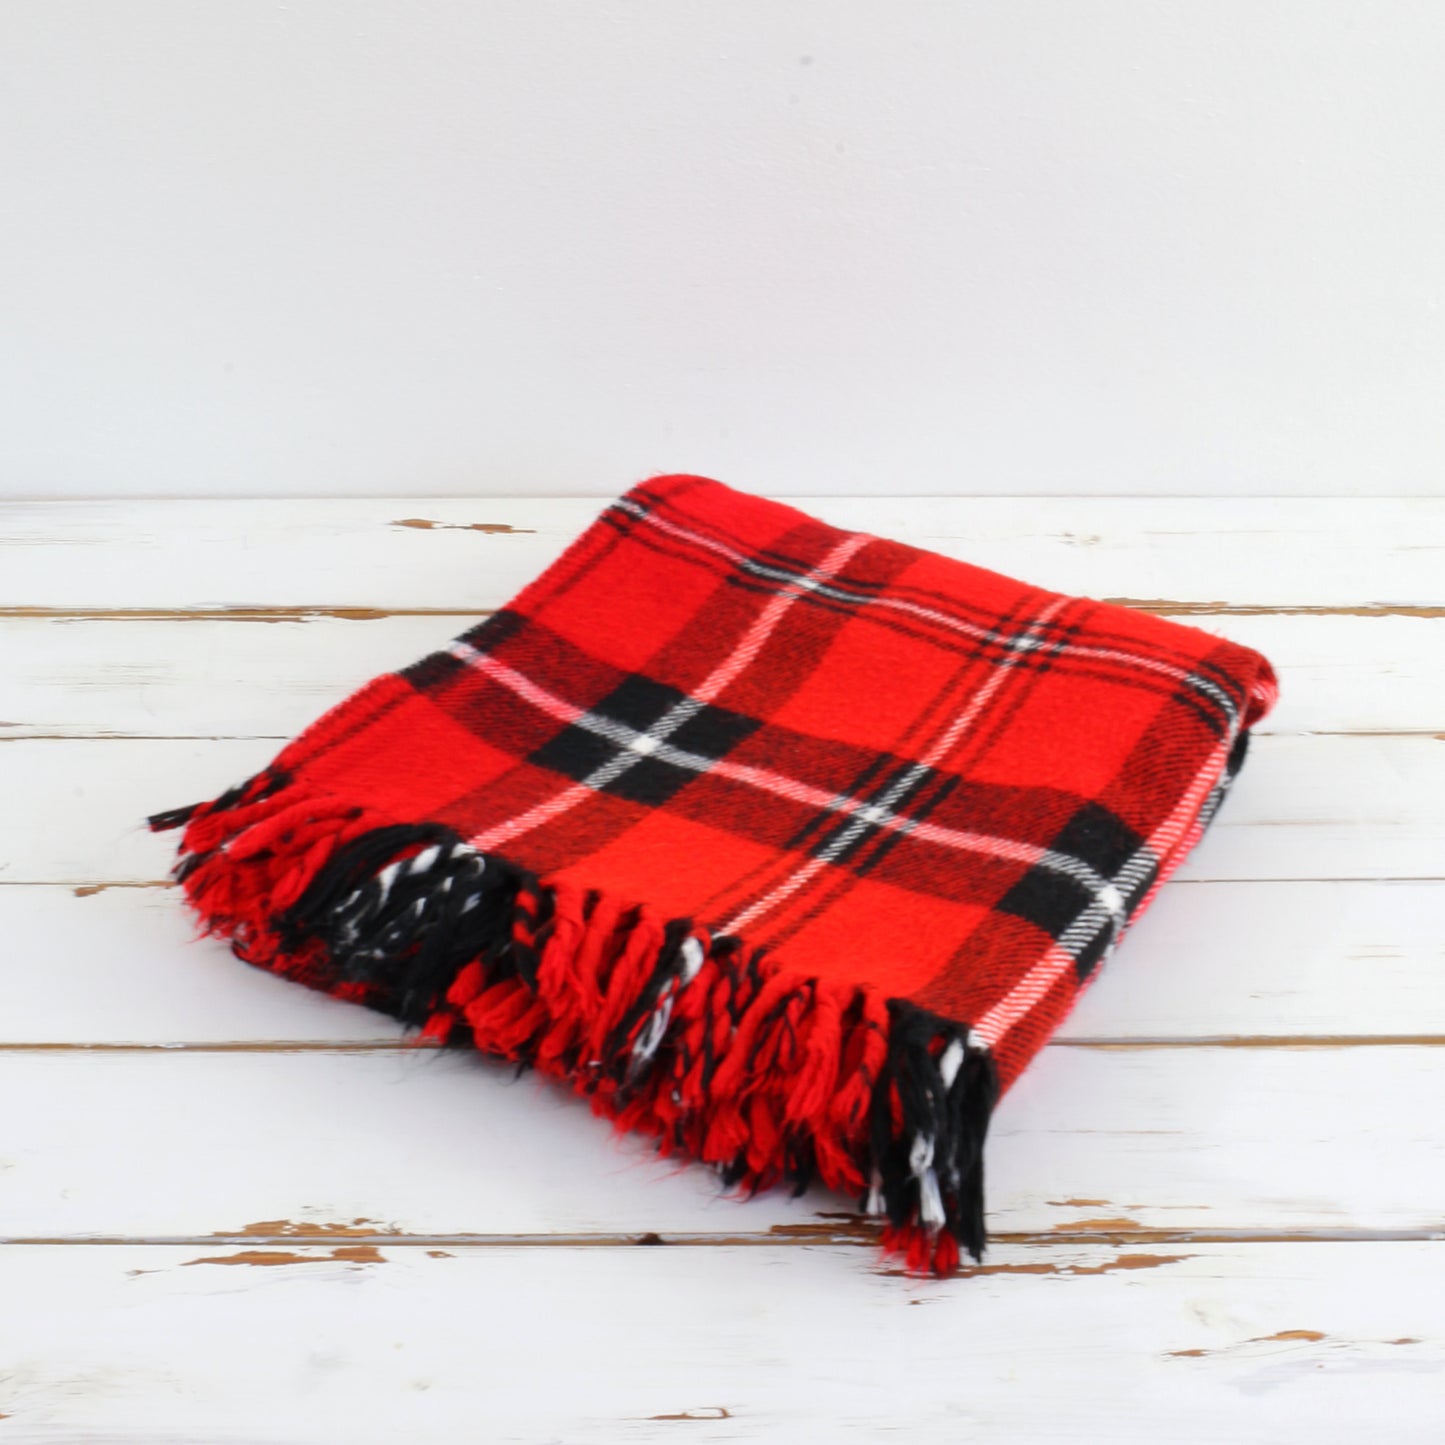 SOLD - Vintage Faribo Plaid Throw Blanket / Red & Black